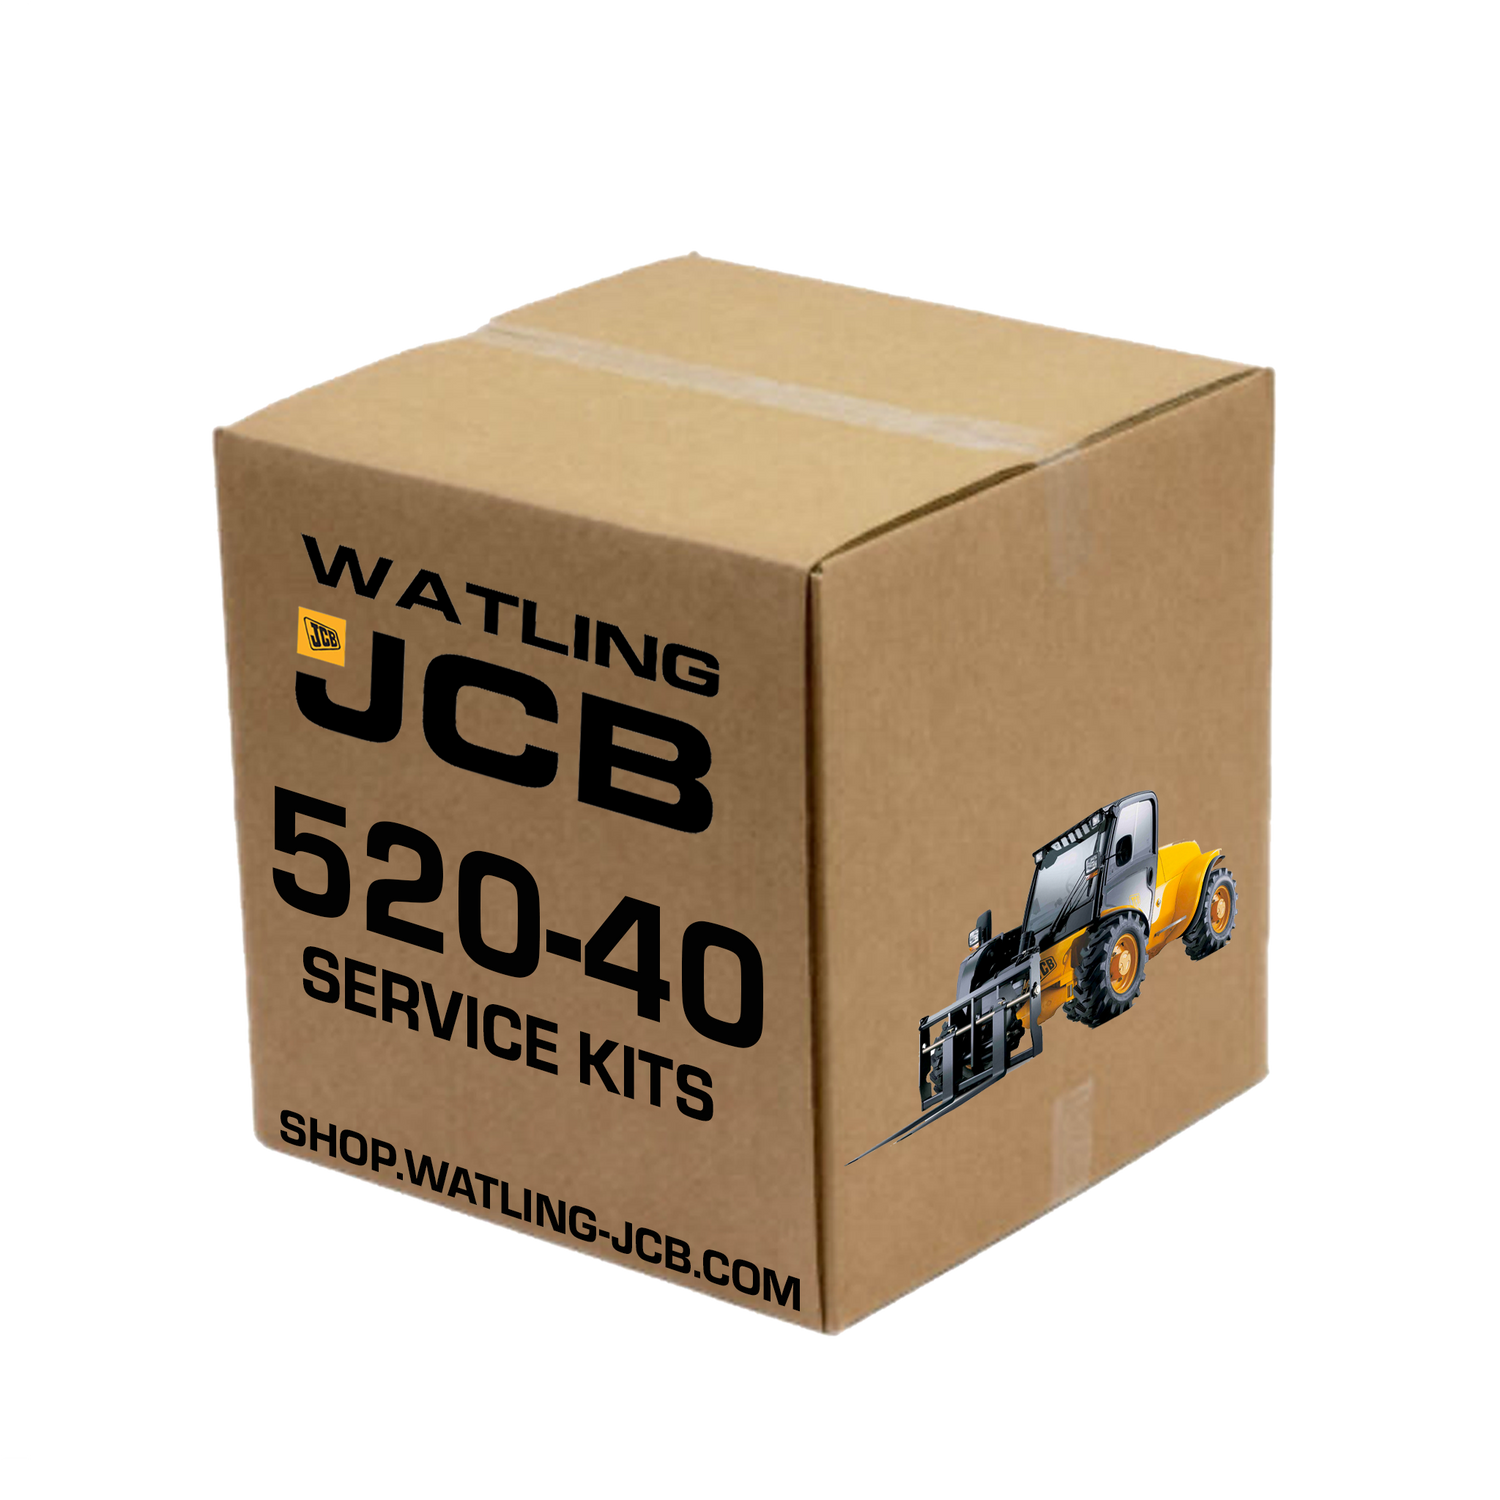 JCB 520-40 Service Kits